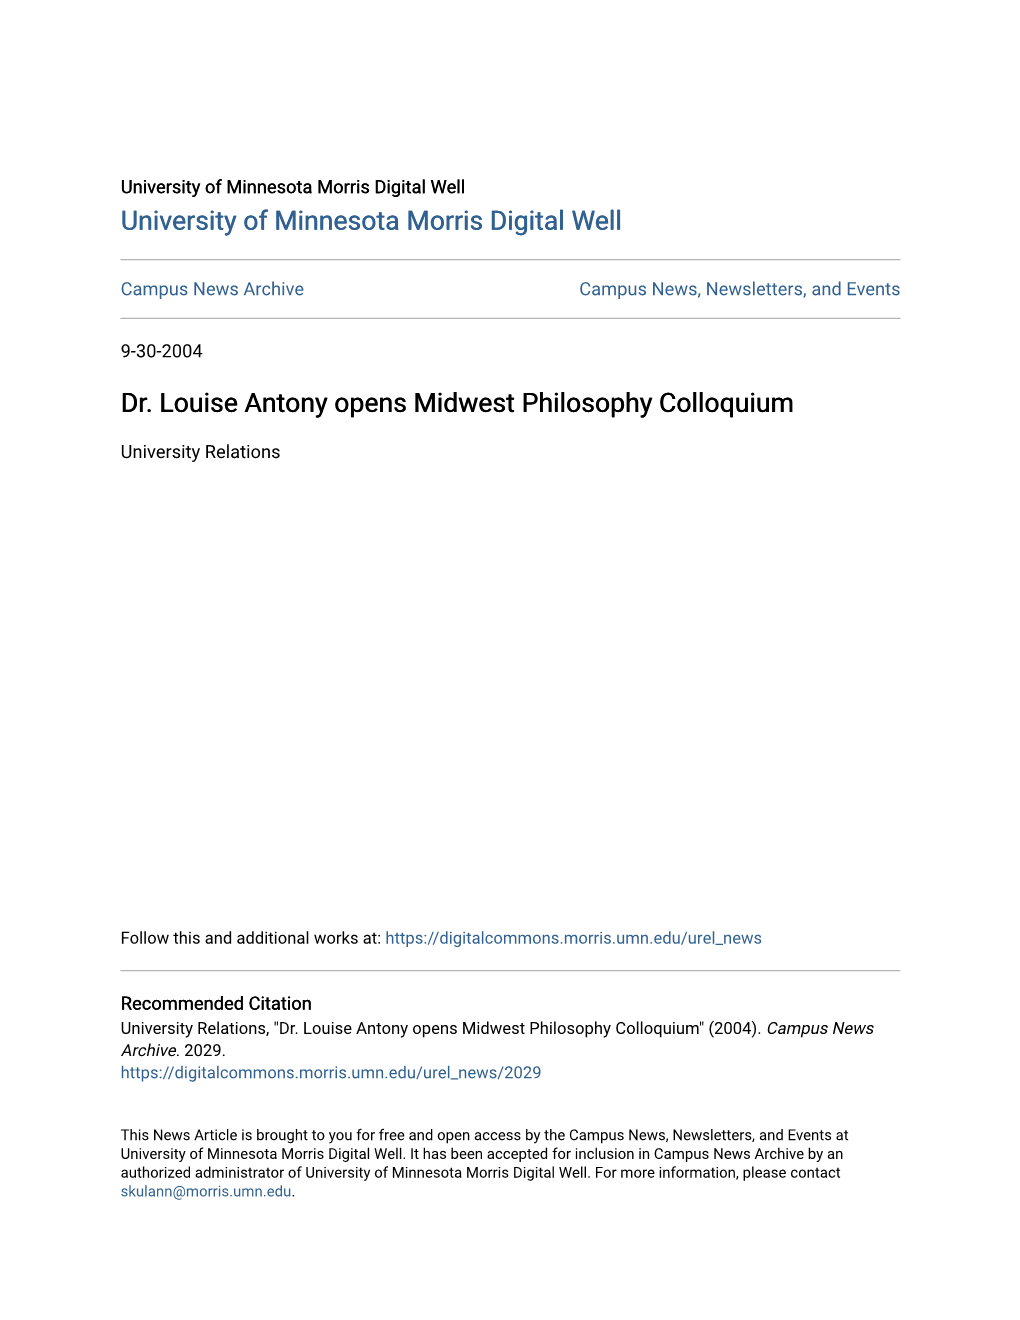 Dr. Louise Antony Opens Midwest Philosophy Colloquium